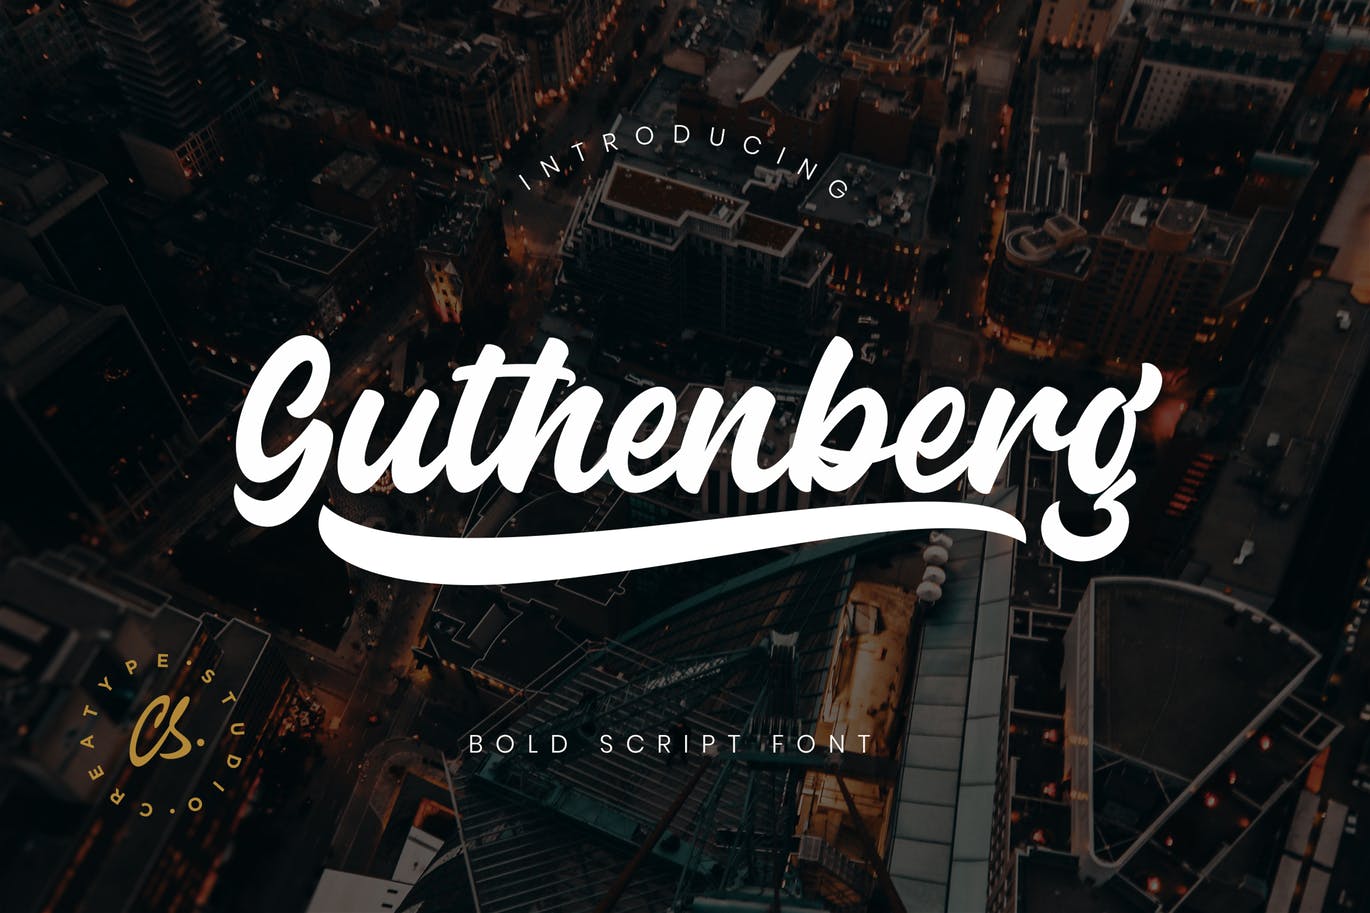 Guthenberg bold script logo font